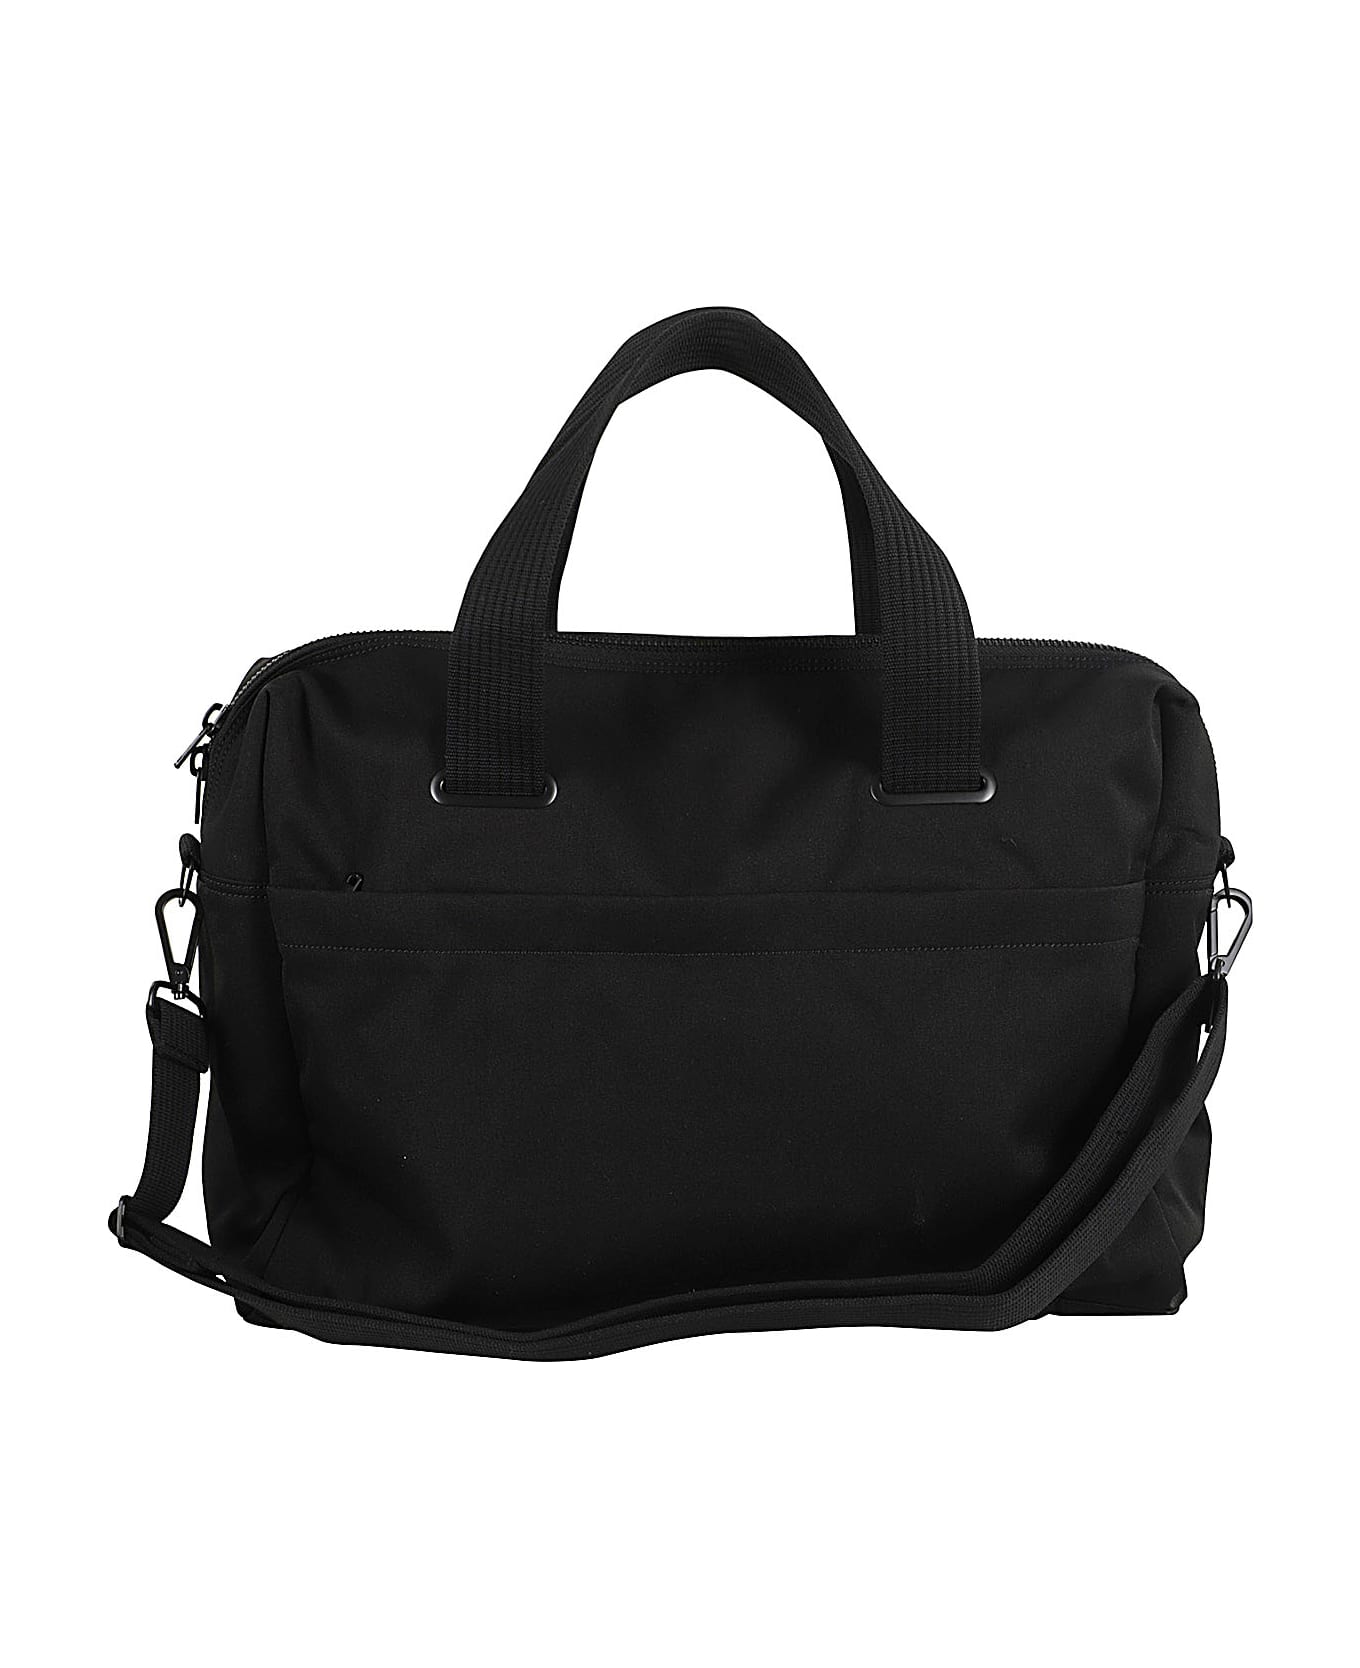 Y-3 Travel Bag - Black